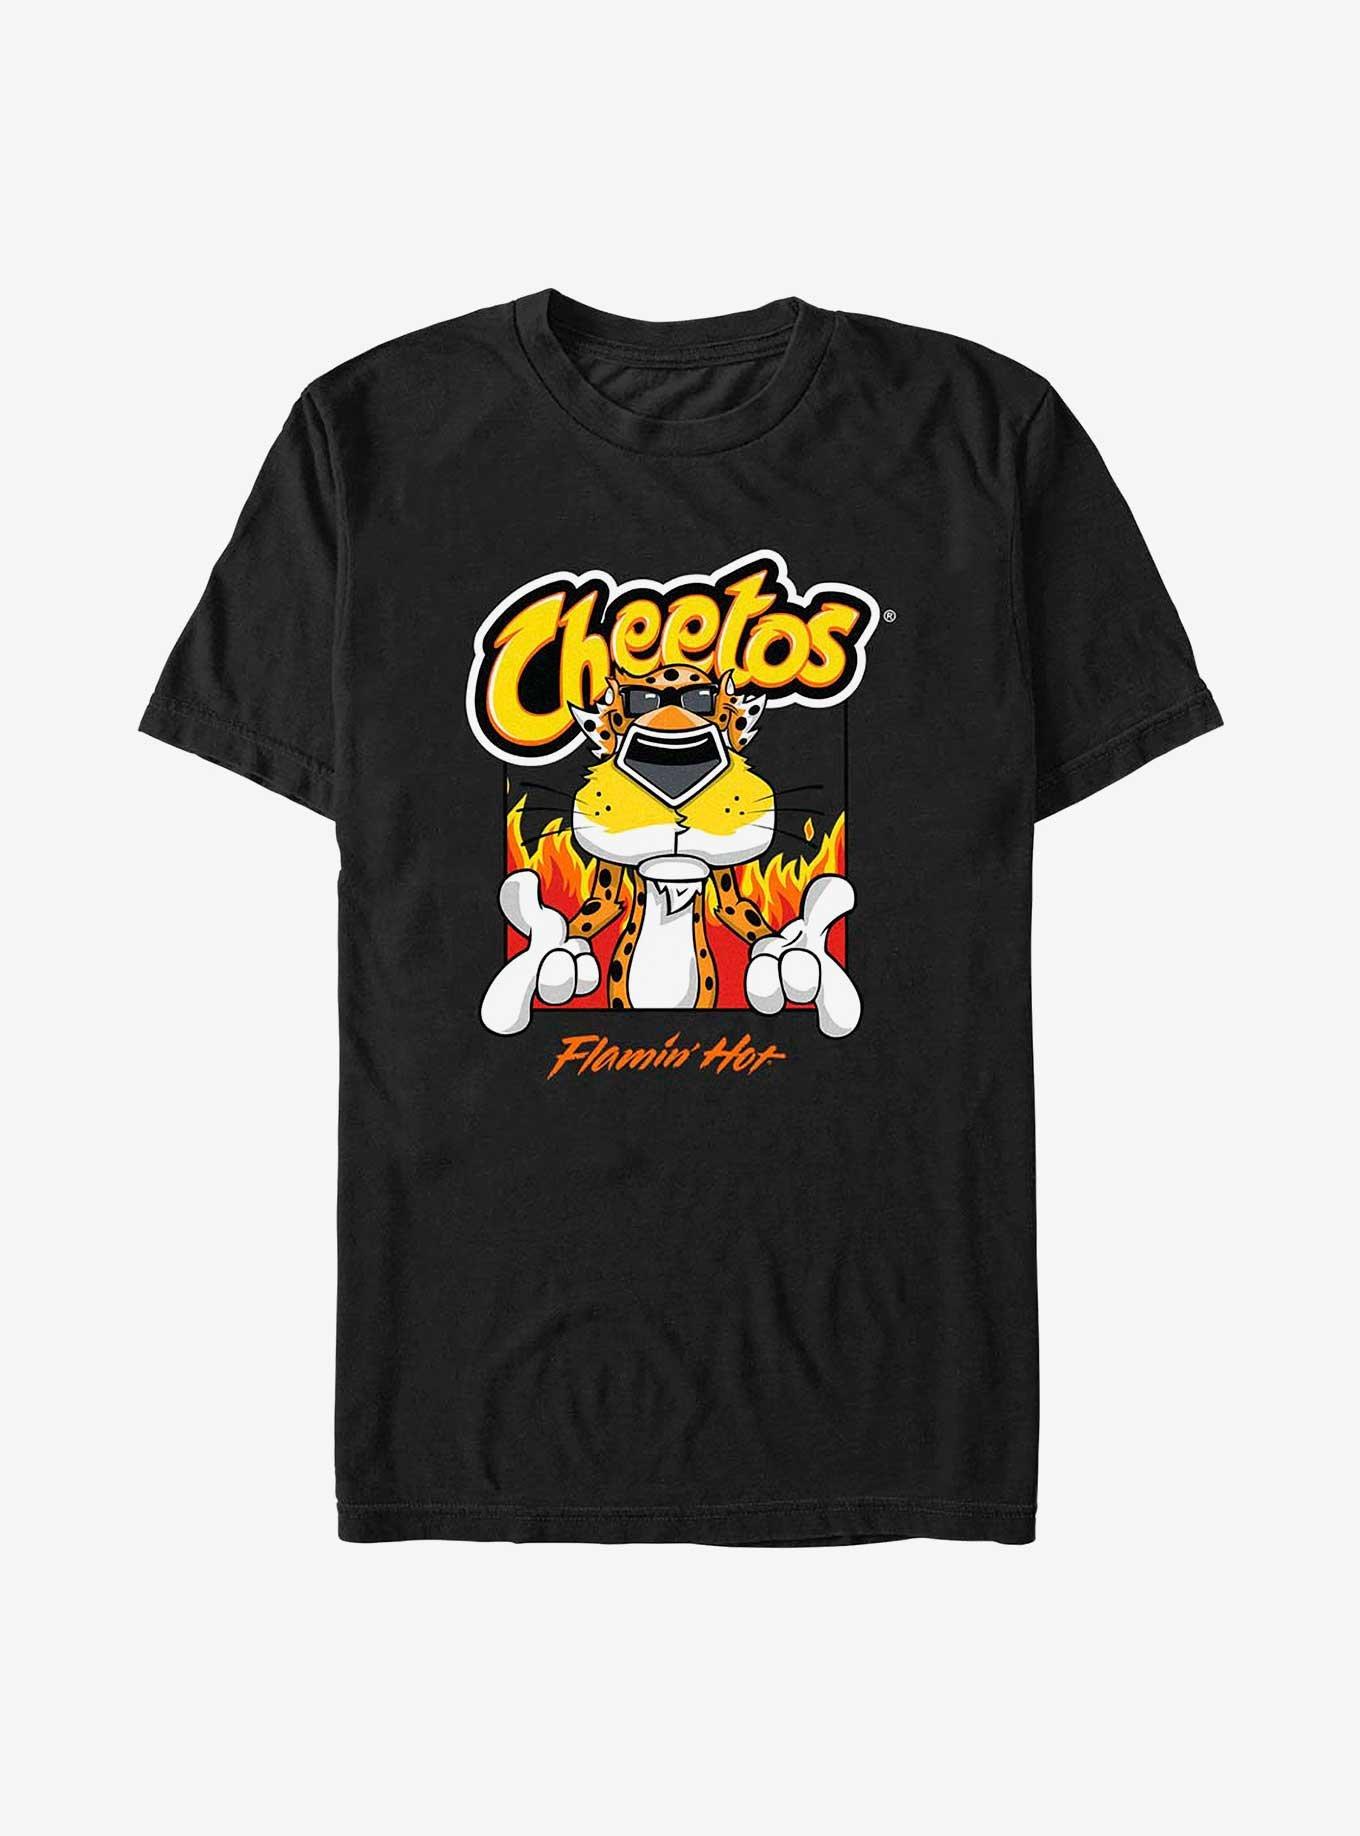 cheetos cat family guy